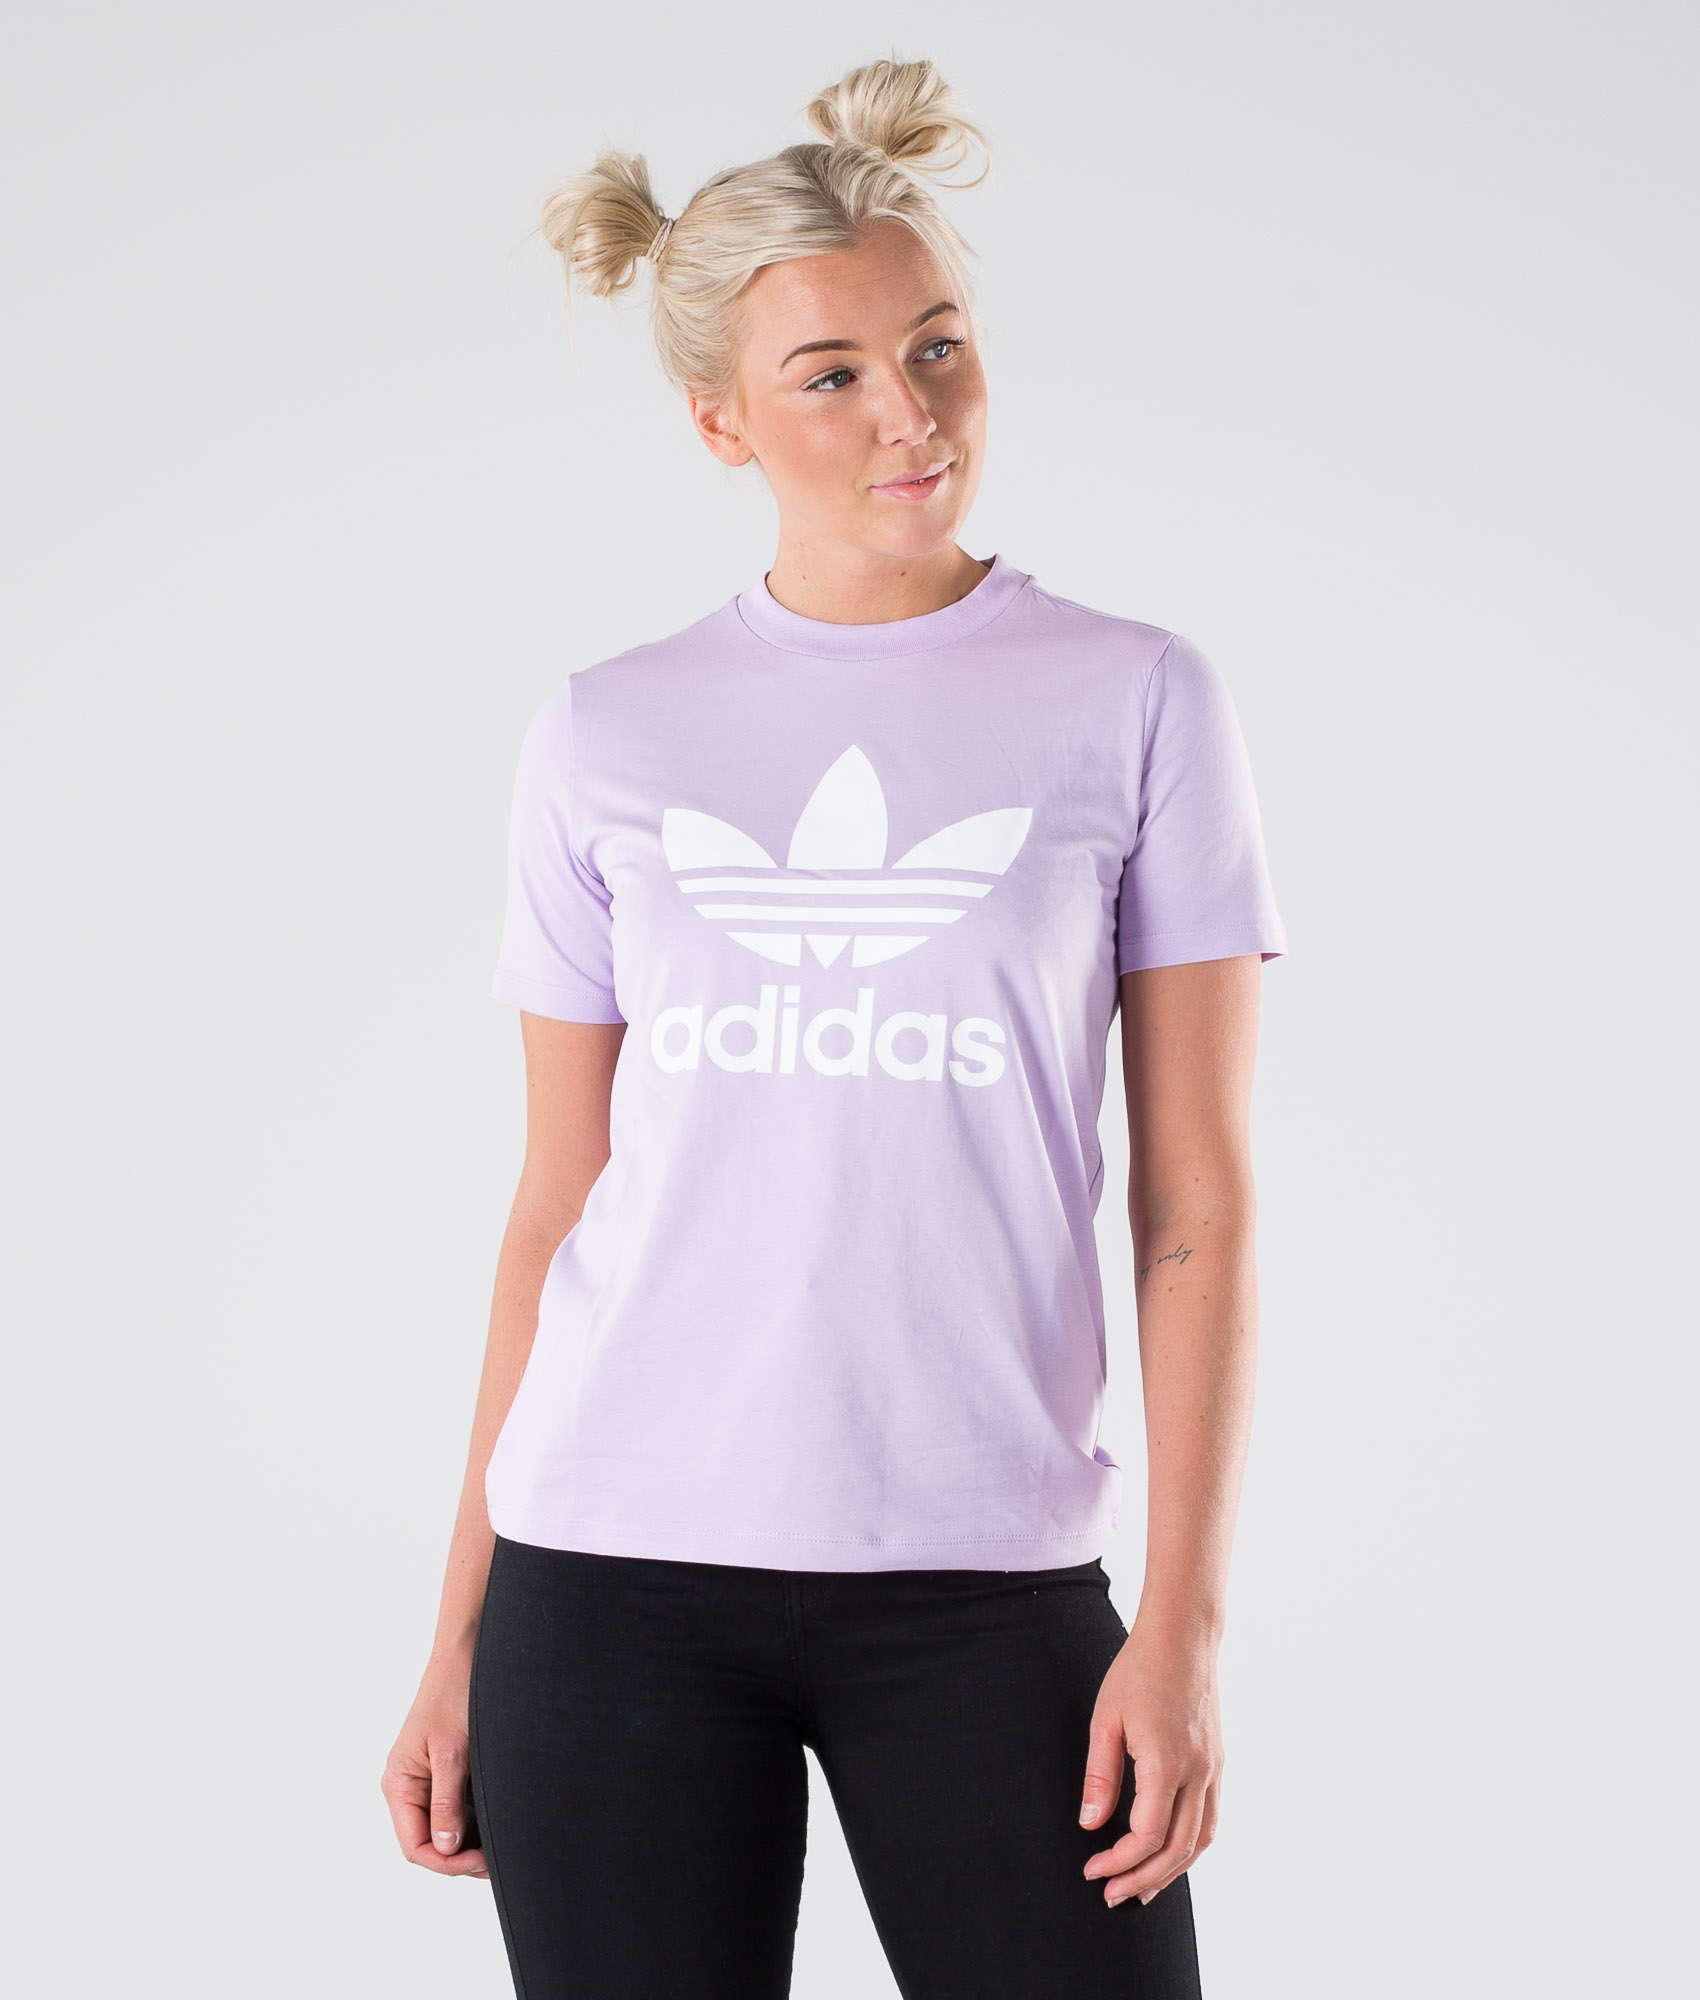 purple adidas shirt